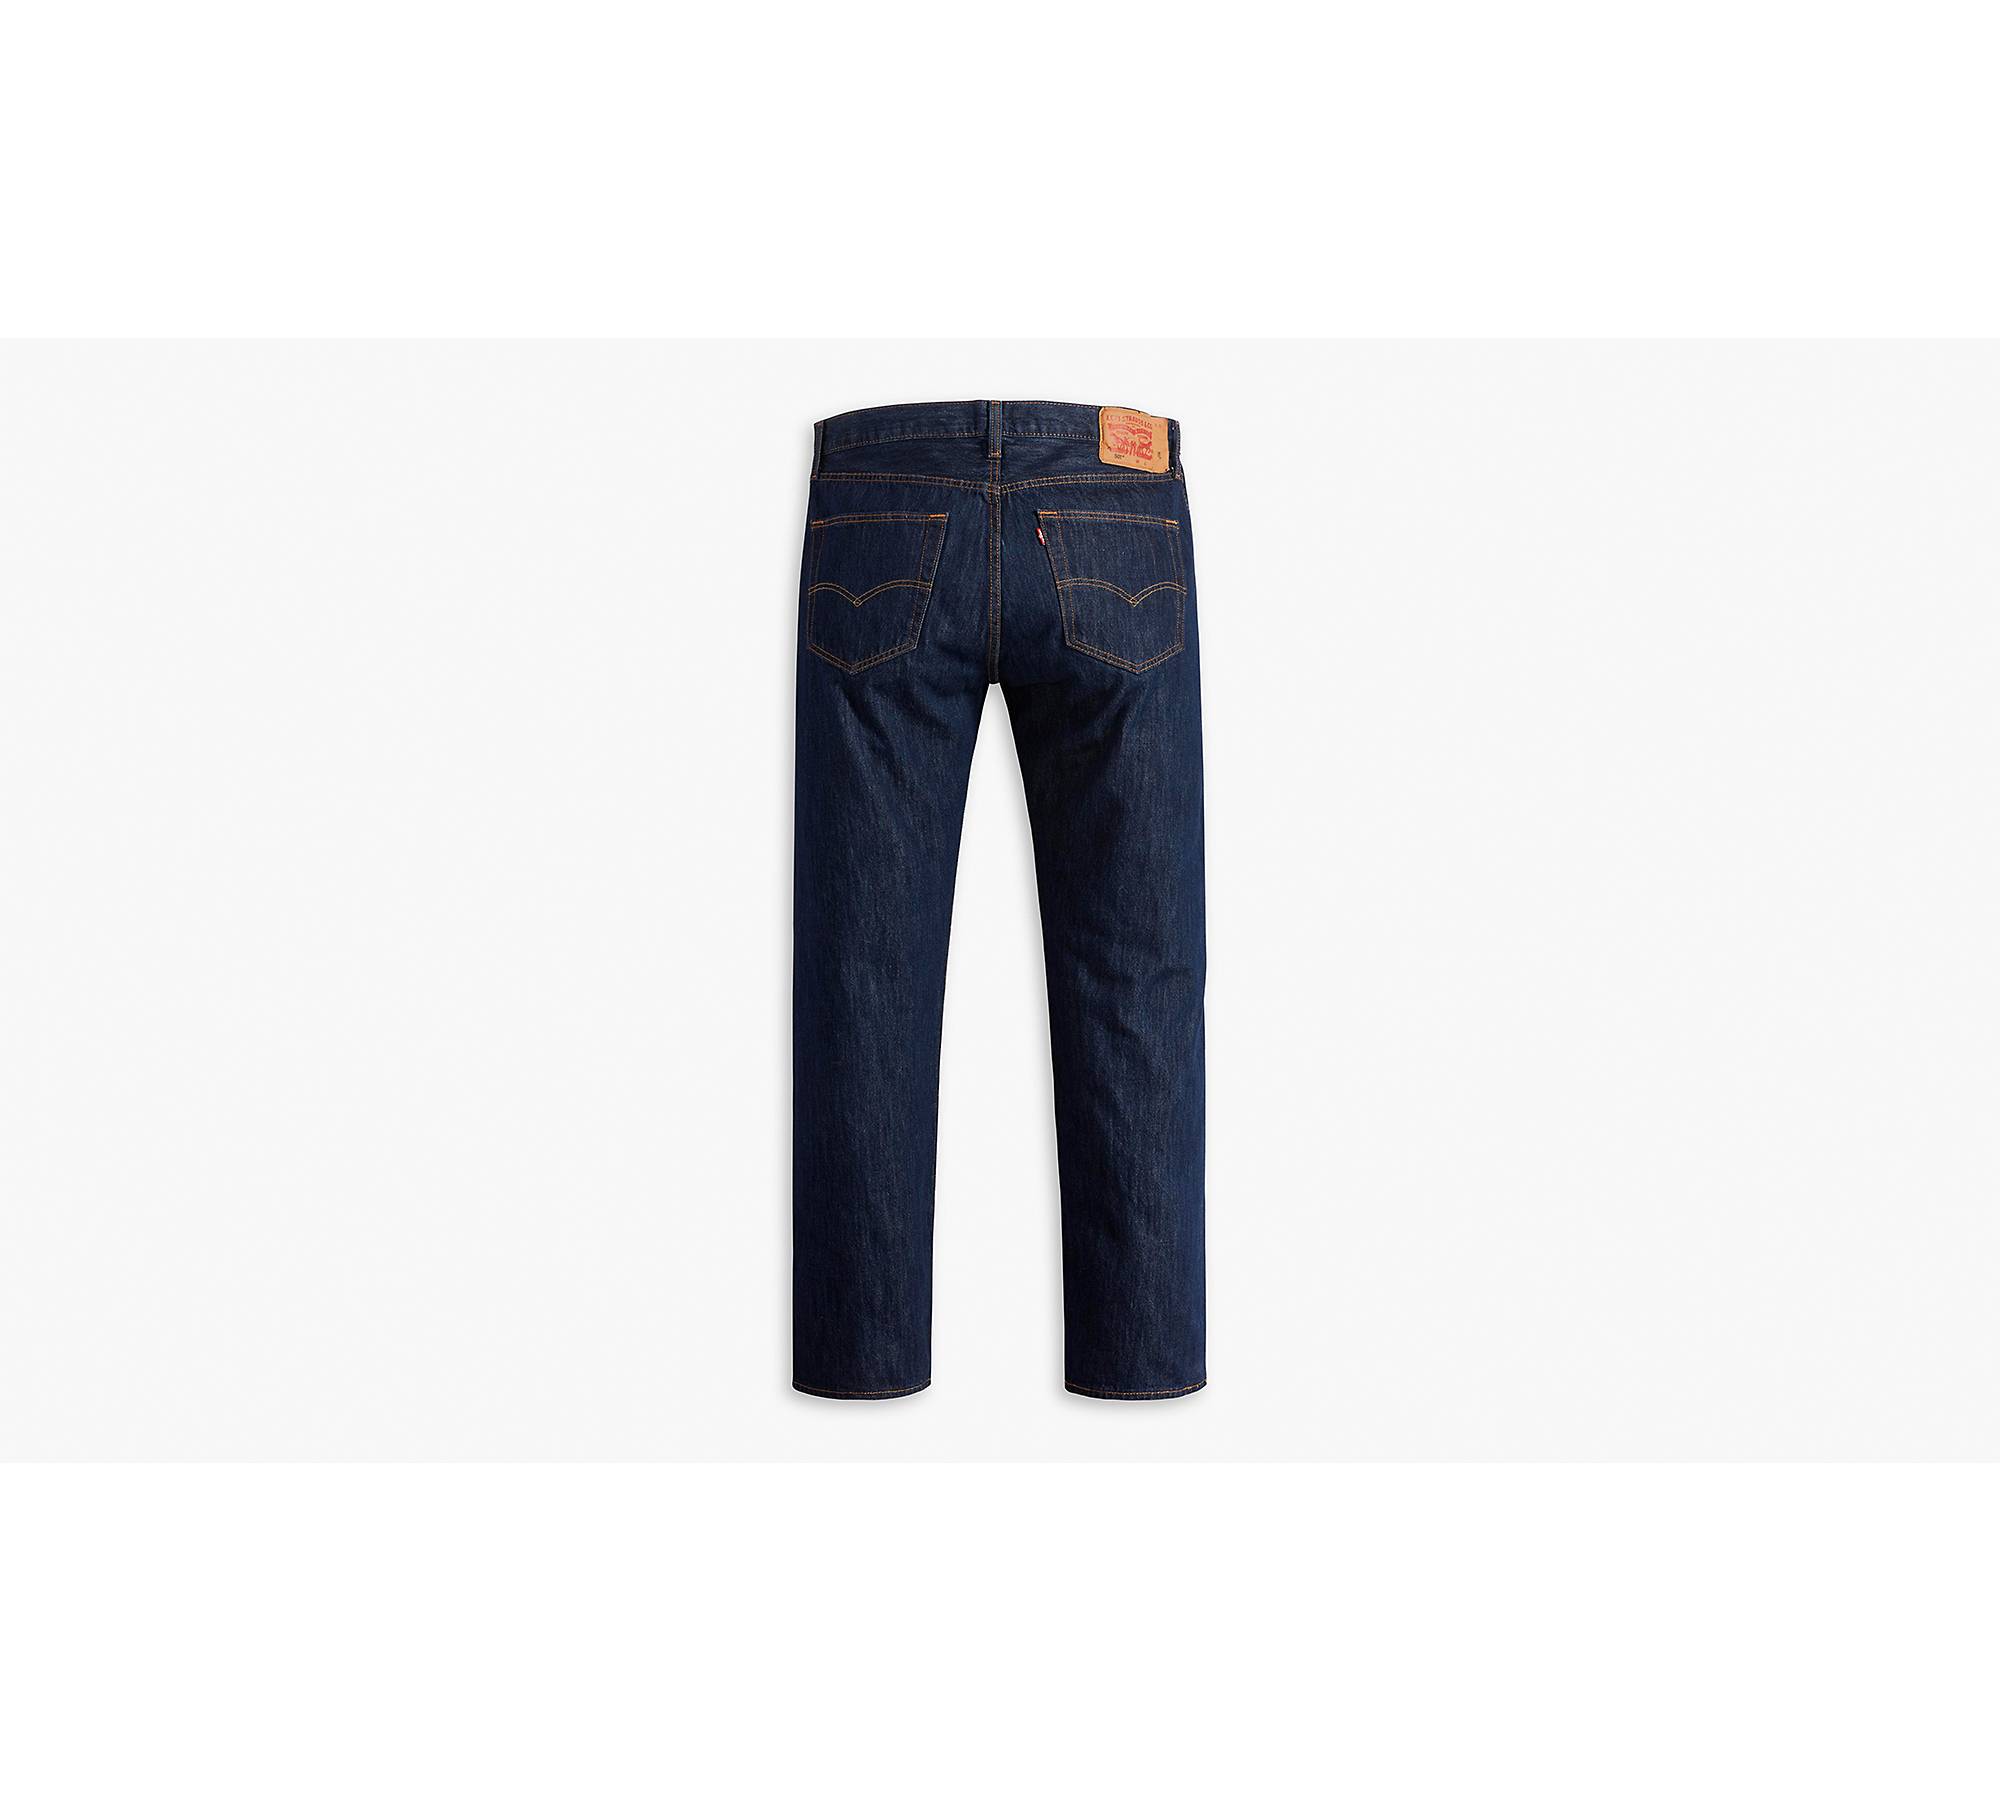 Buy Elegant and Stylish Jeans for Men Boys Denim Jeans Stretchable Denim  Jeans Pants Size 40 Color Dark Blue at .in